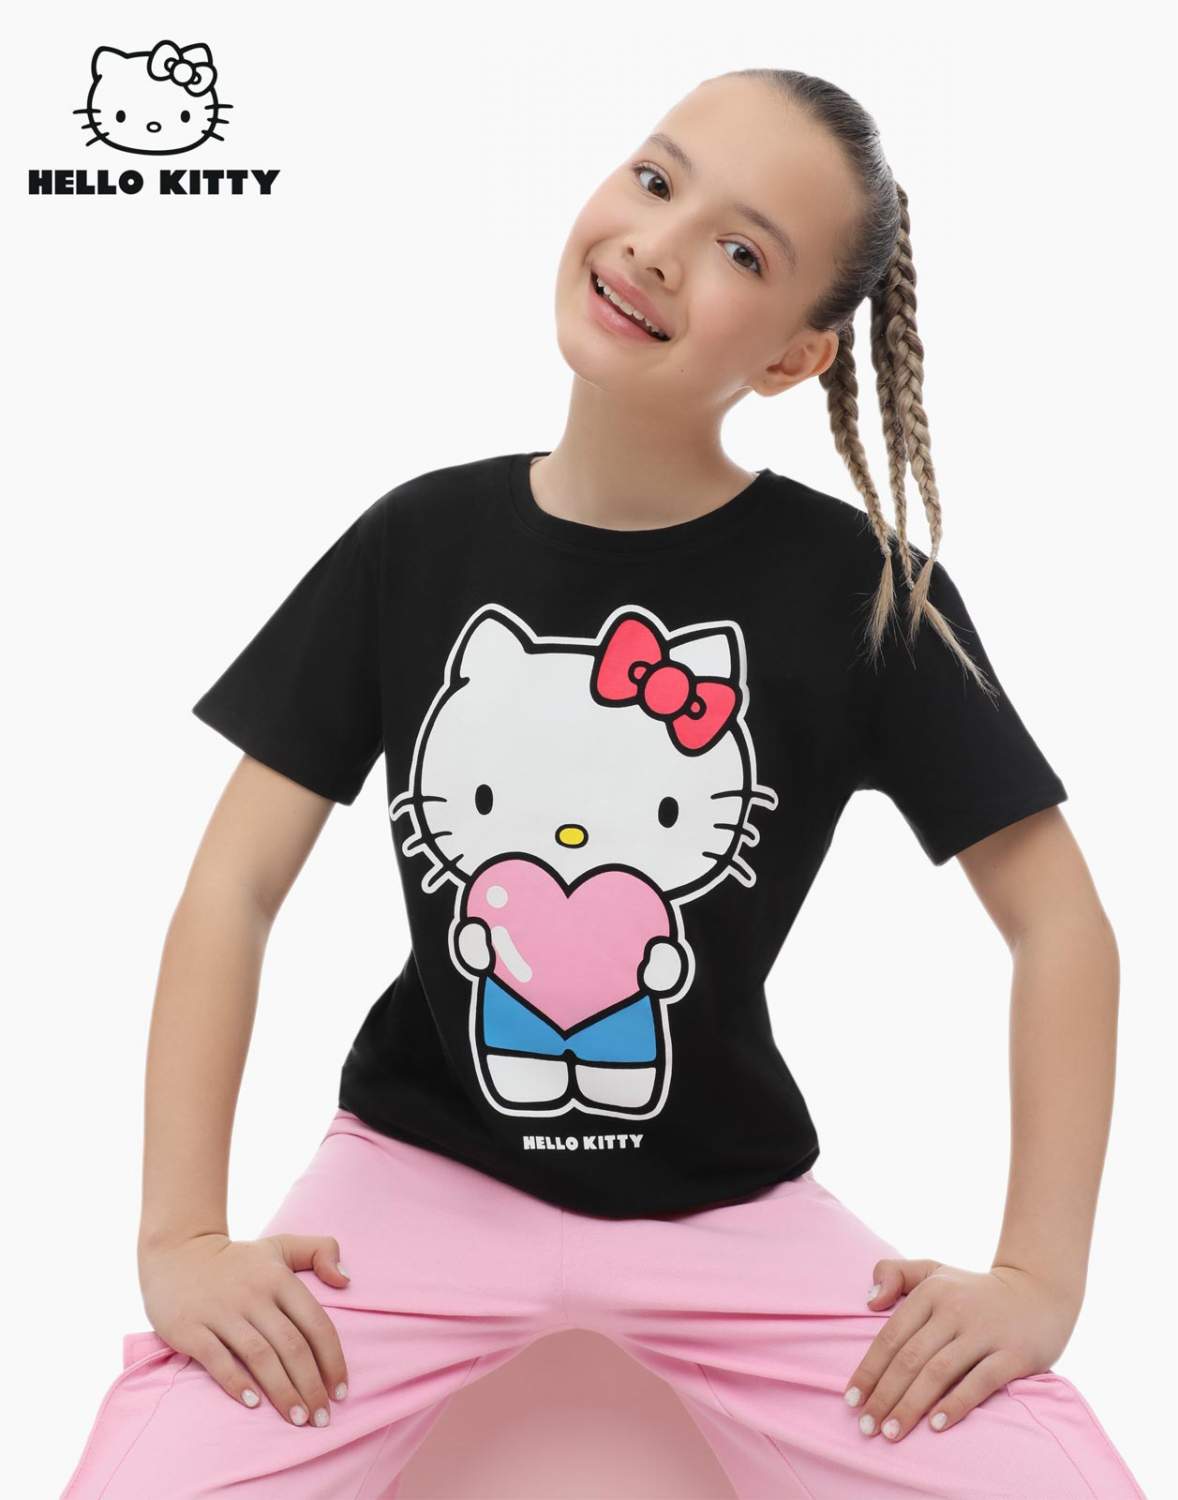 ♡HELLO KITTY T-SHIRT♡  Футболки для девочек, Счастливые лица